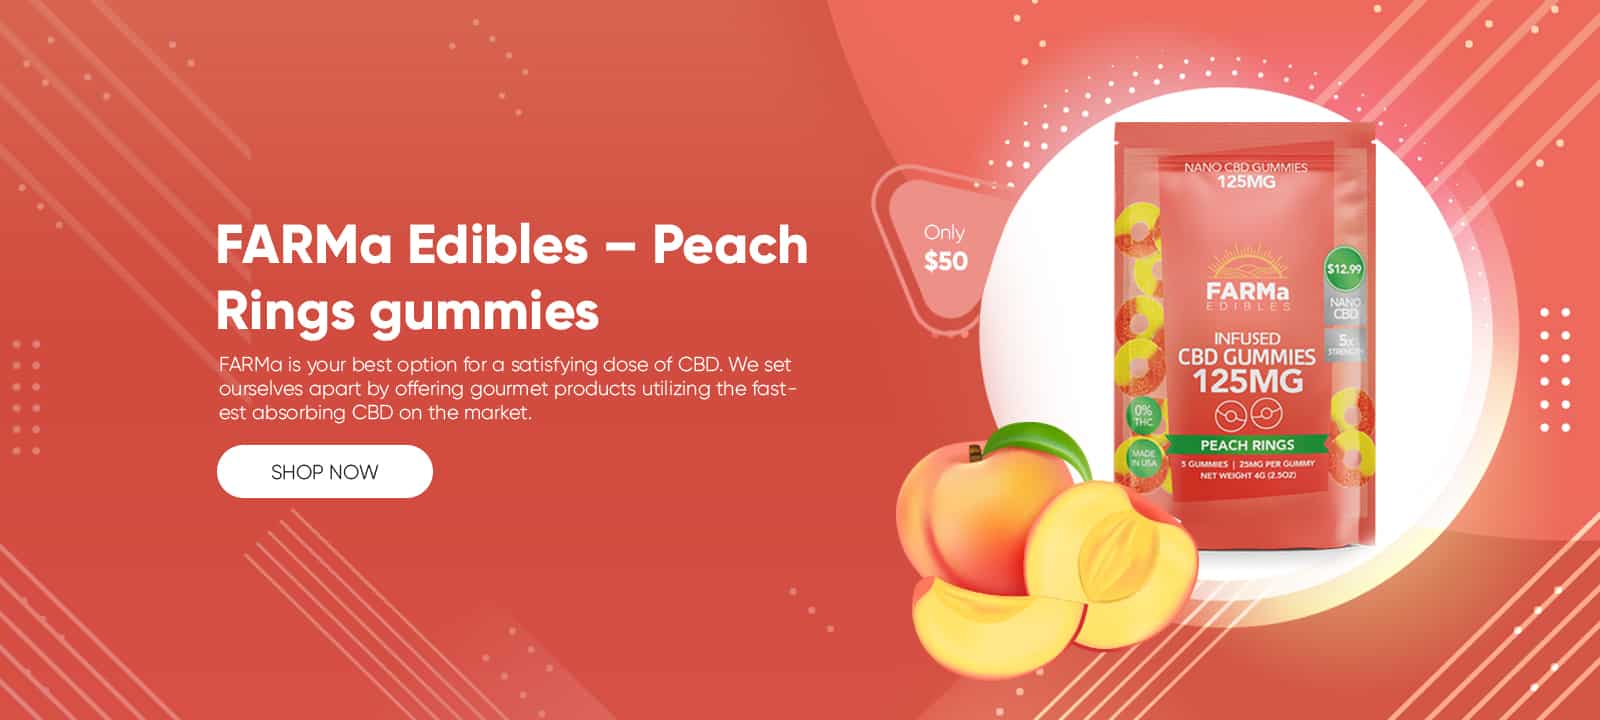 FARMa Edibles – Peach Rings 10ct. box – 125mg per bag